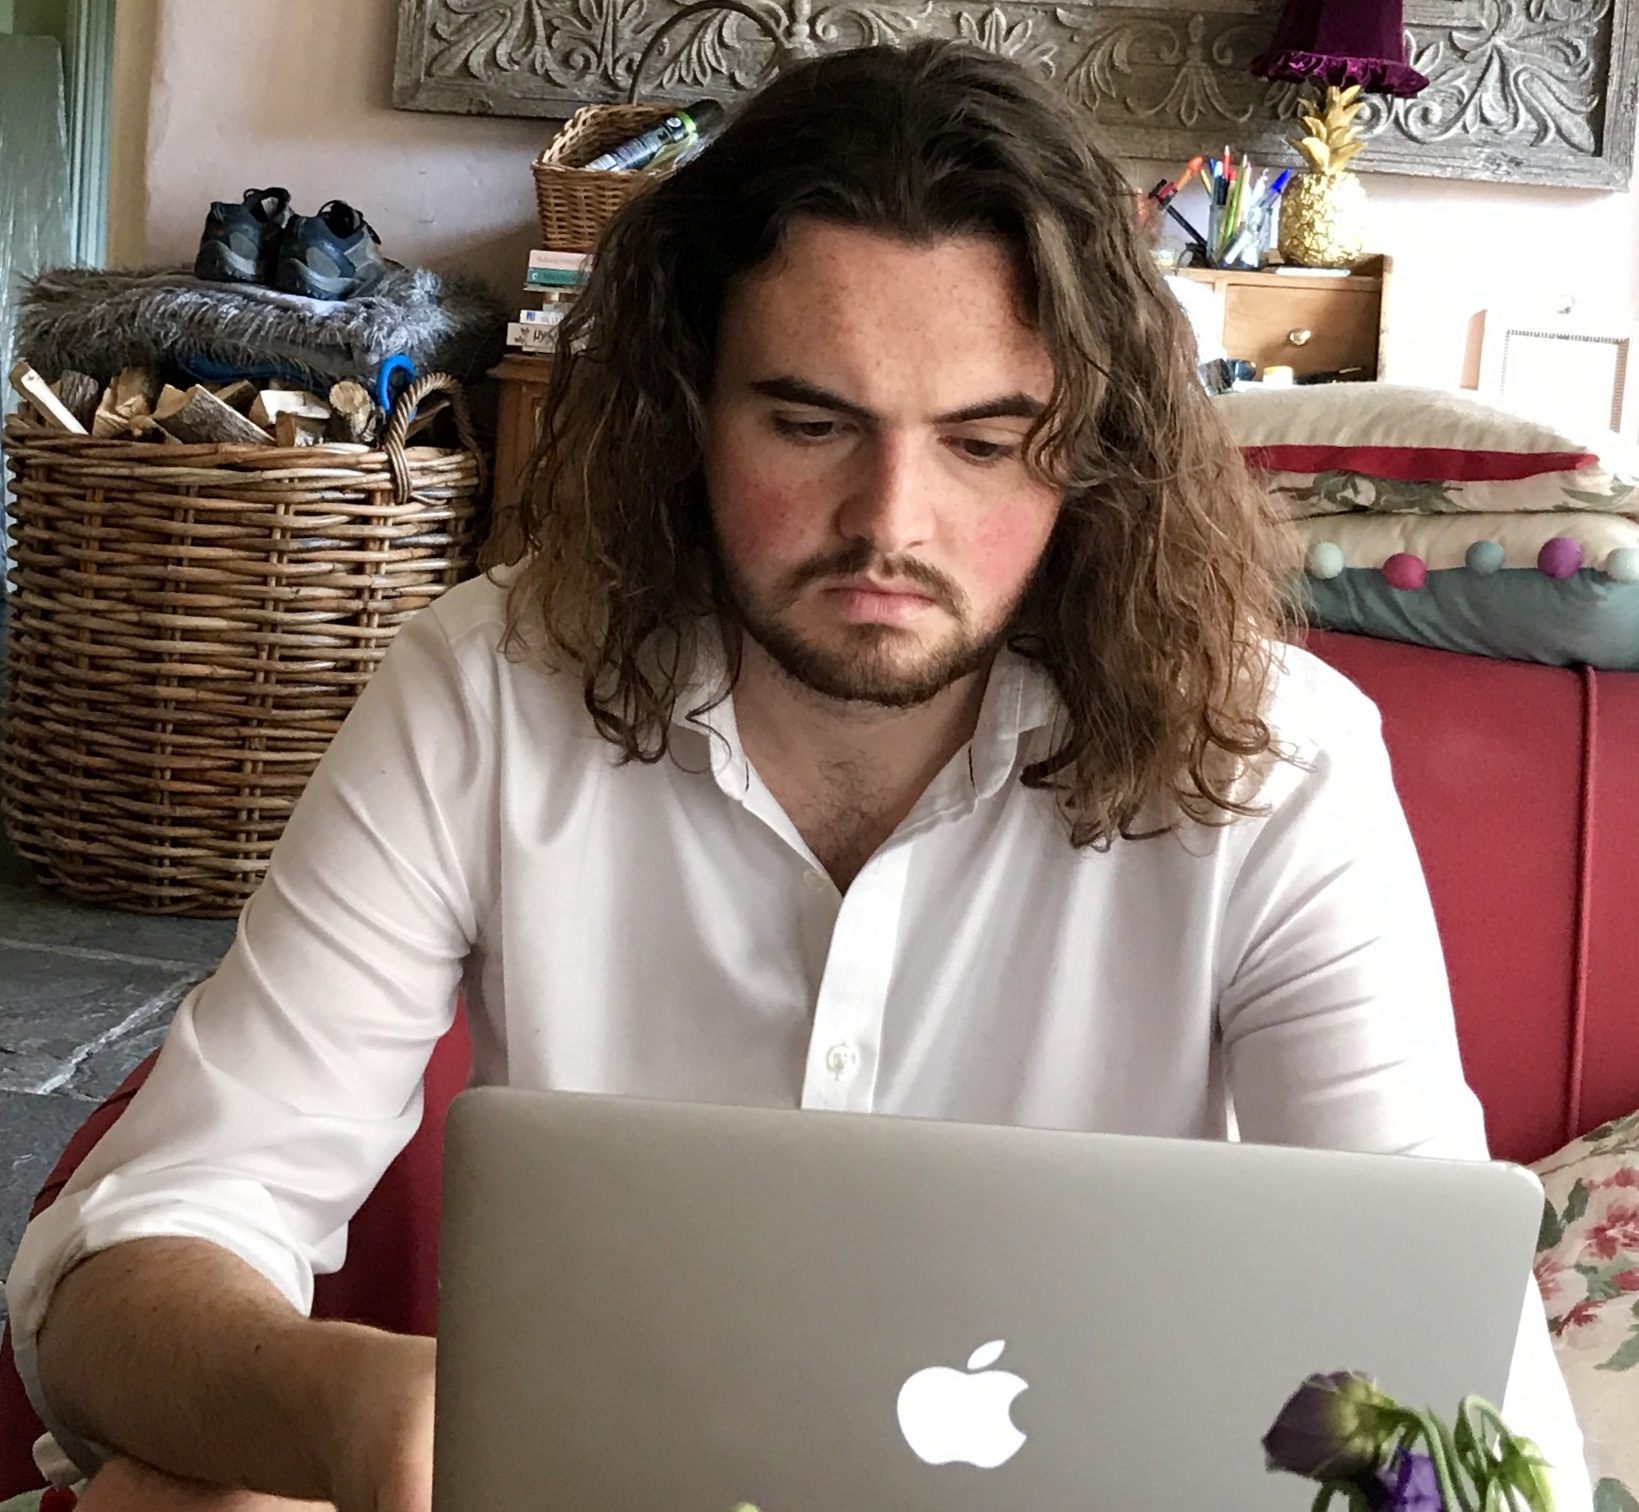 Josh sits working on his laptop